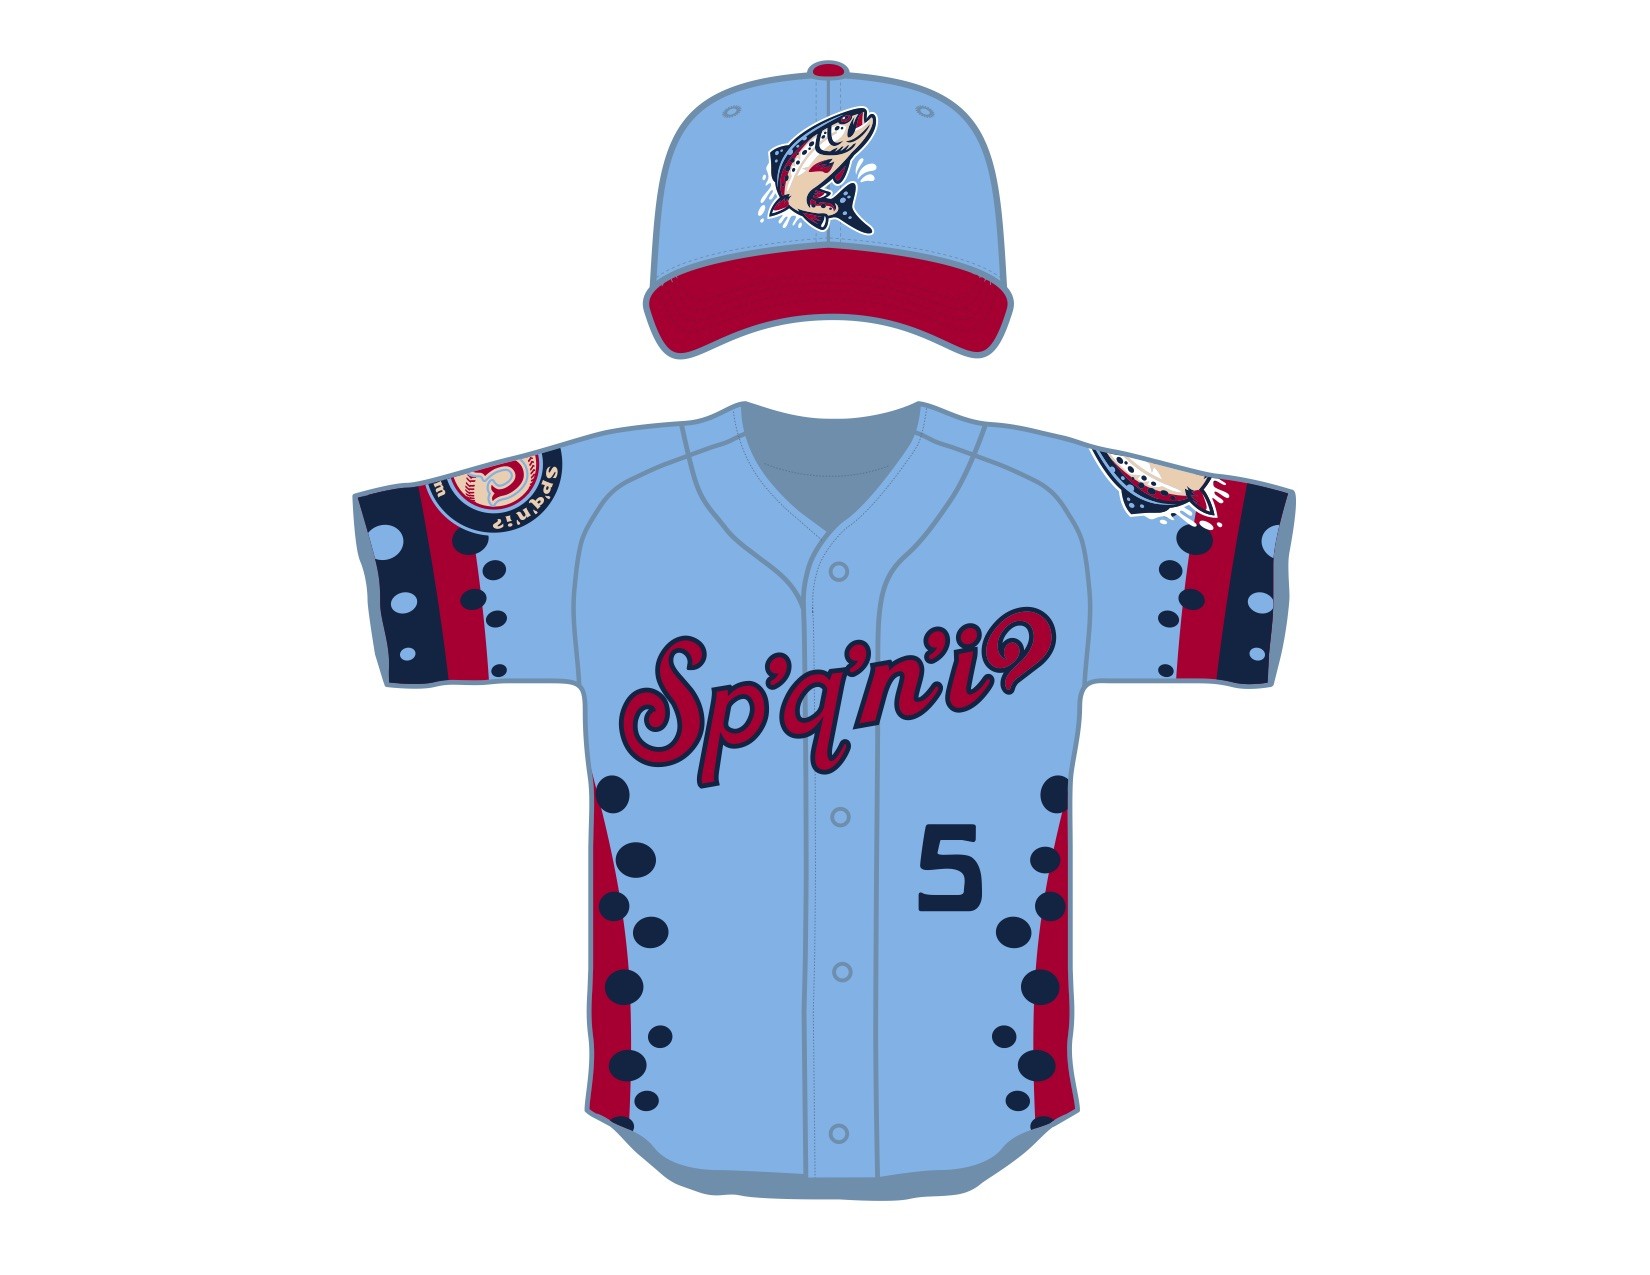 Spokane Indians redband themed mascot and uniform - Spokane Falls